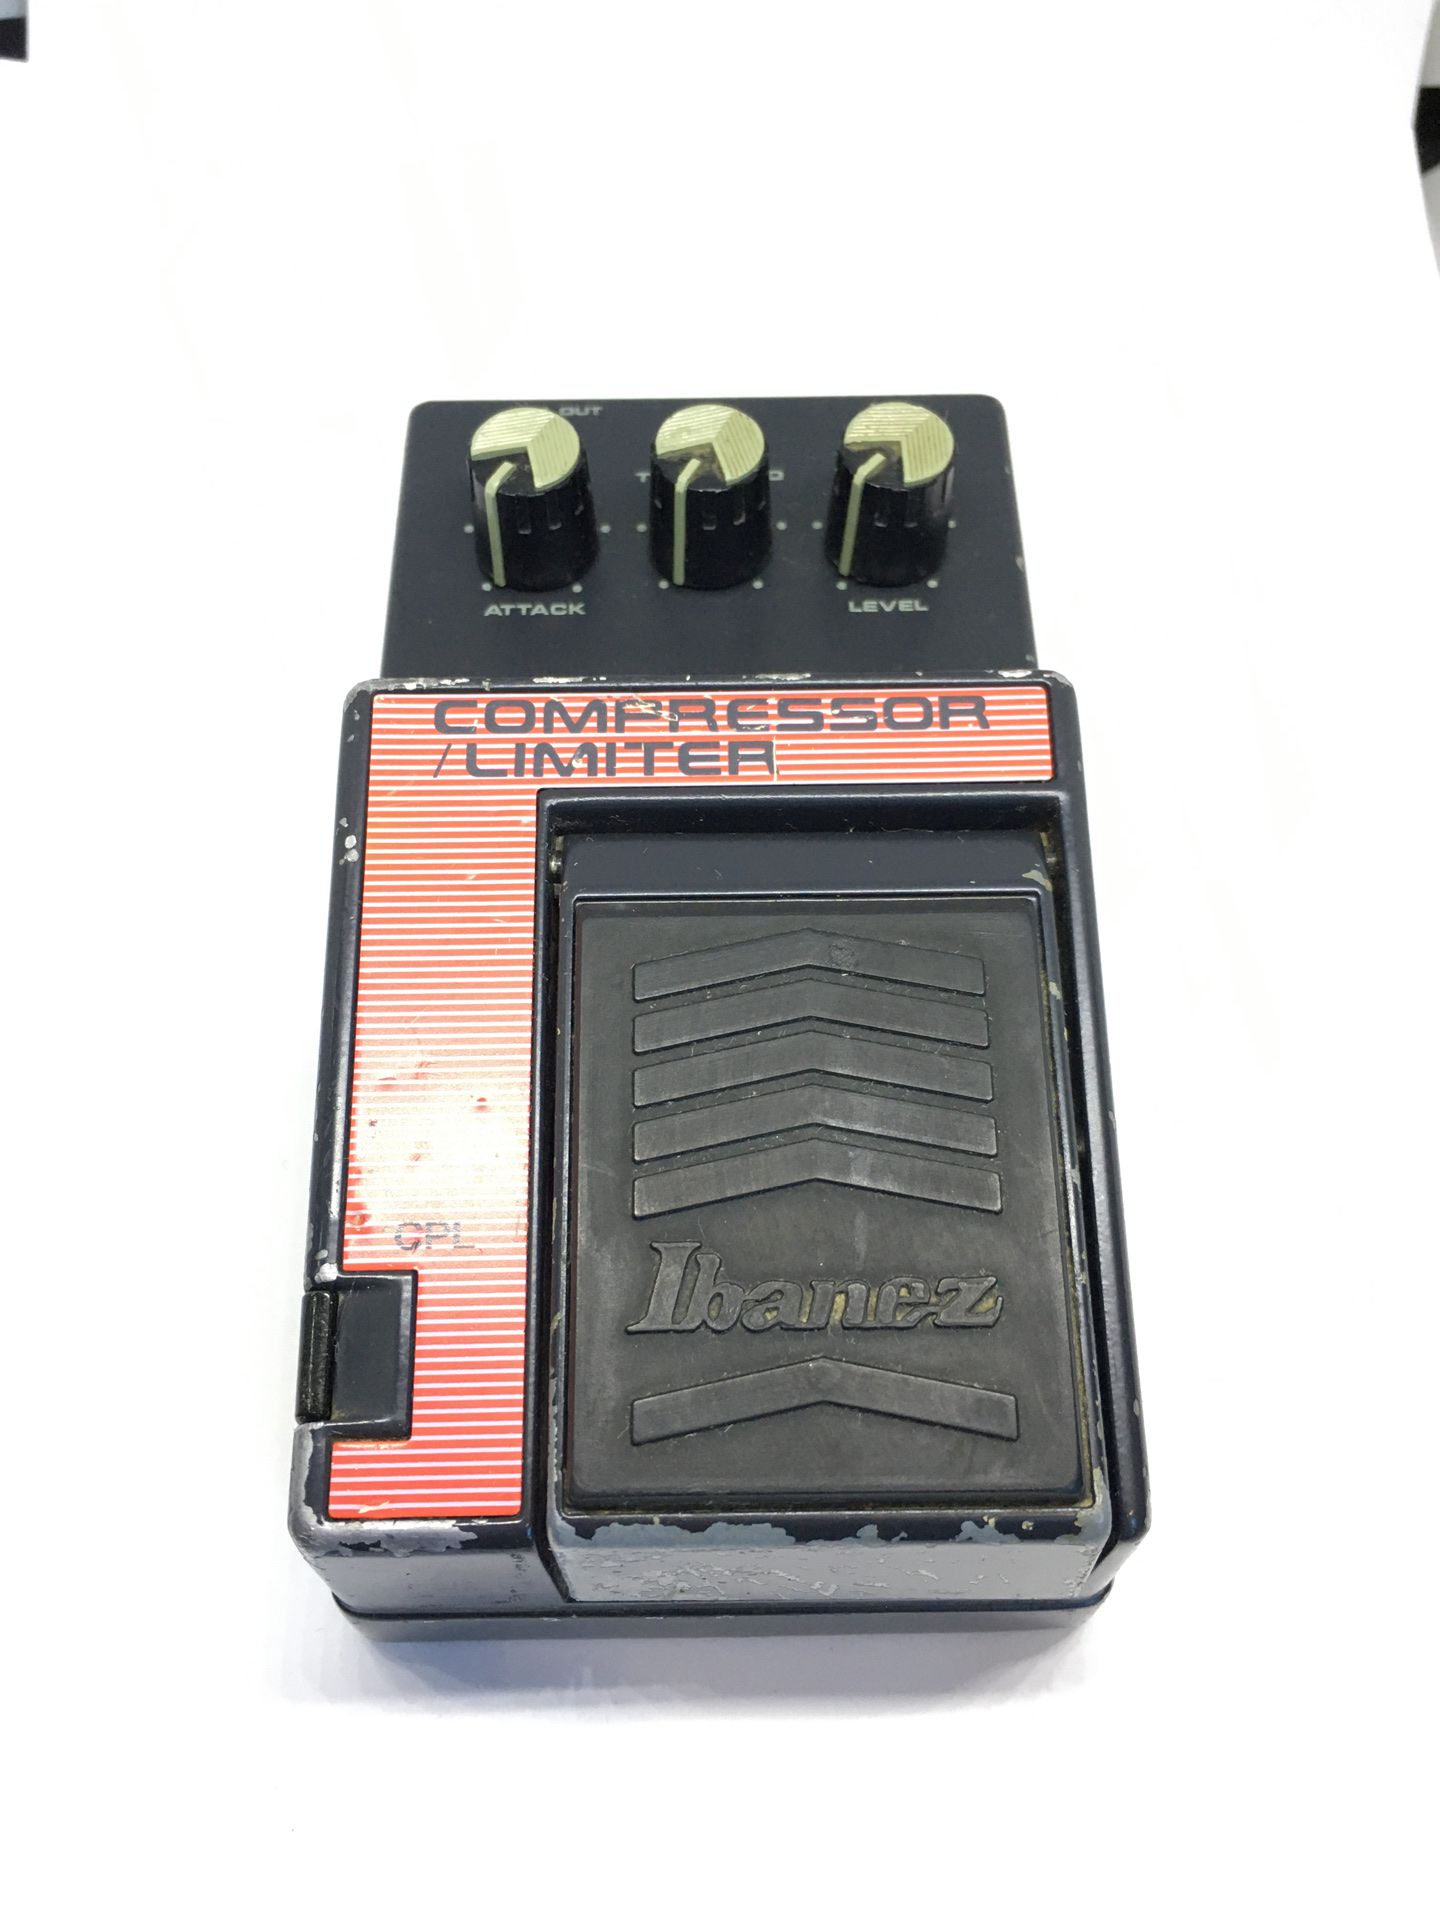 Ibanez bass guitar pedal compressor/limiter BCP007344